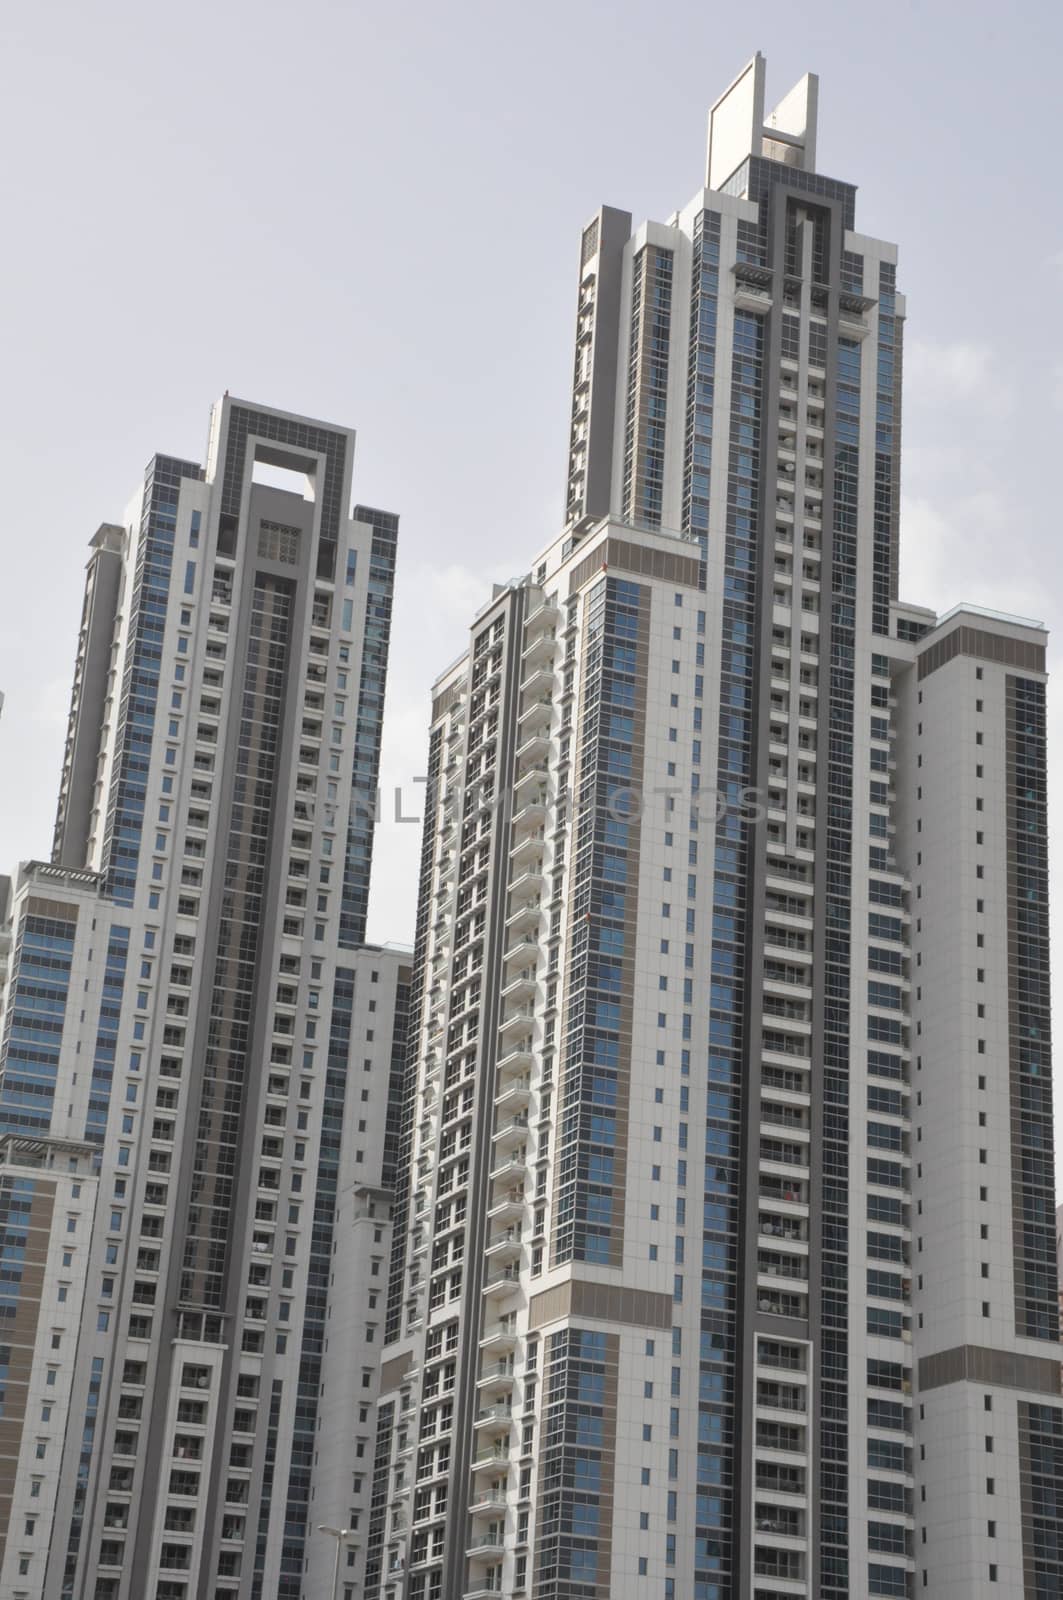 View of Sheikh Zayed Road skyscrapers in Dubai, UAE by sainaniritu